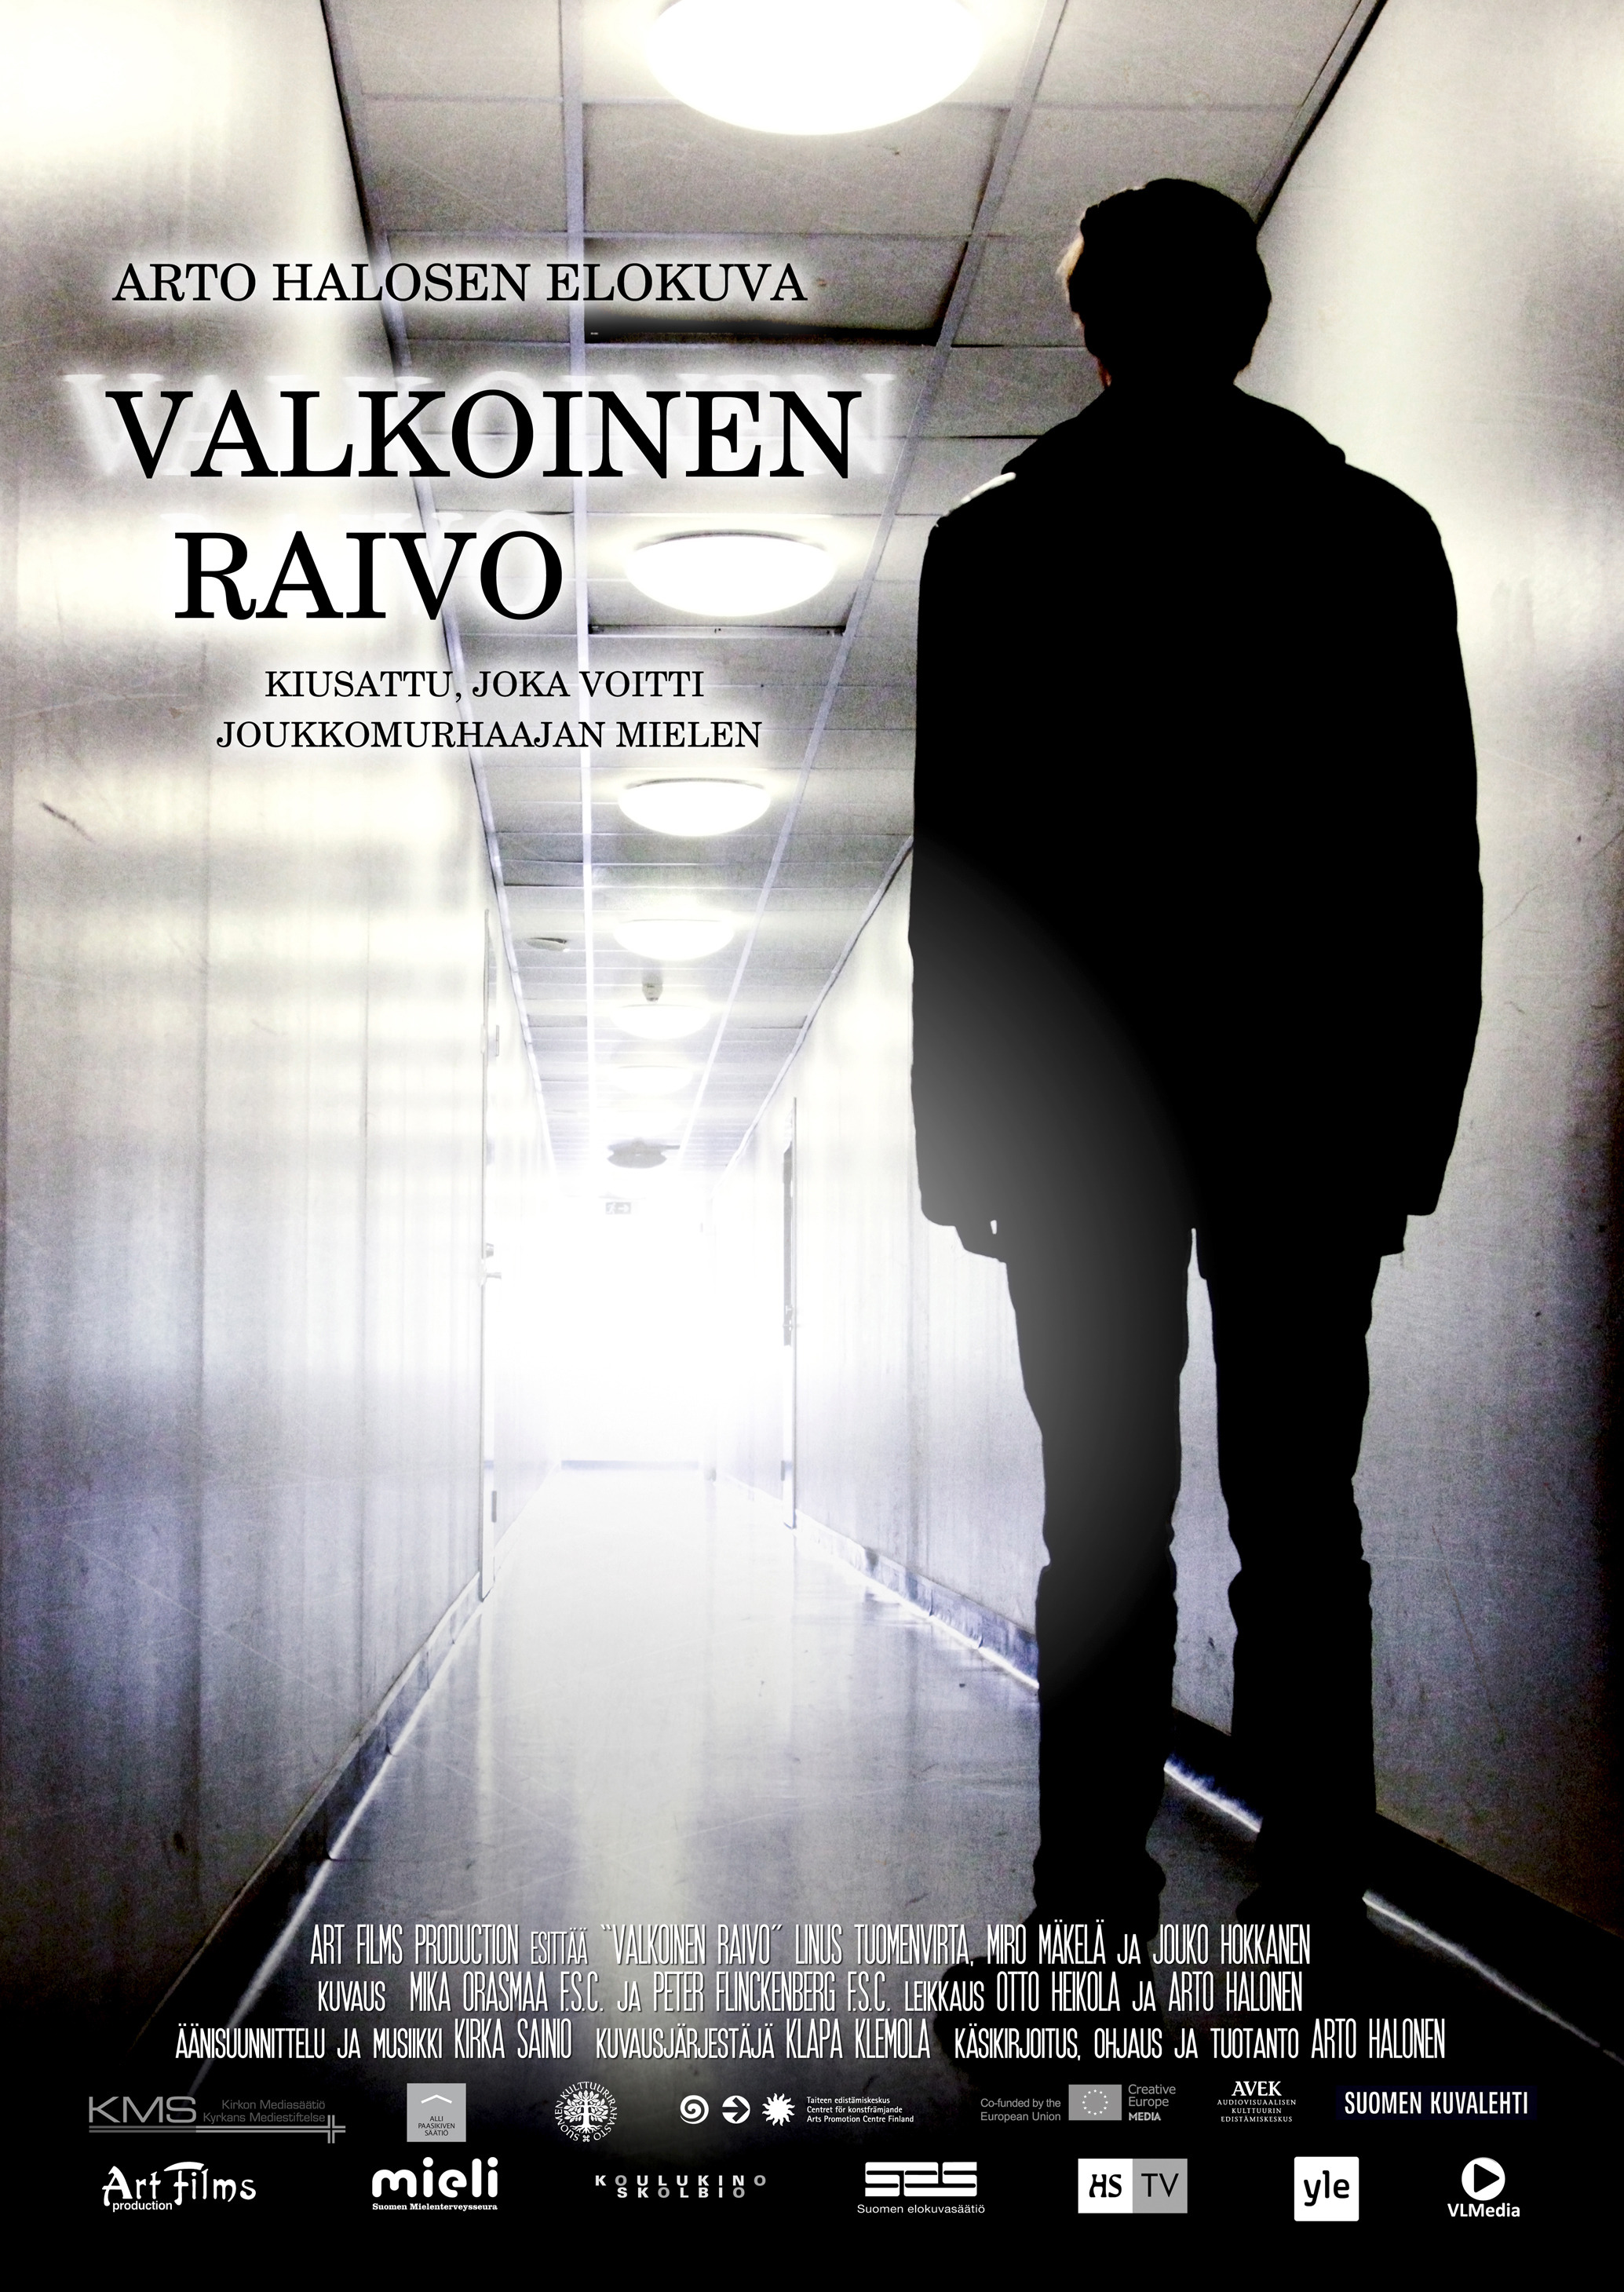 Mega Sized Movie Poster Image for Valkoinen raivo 